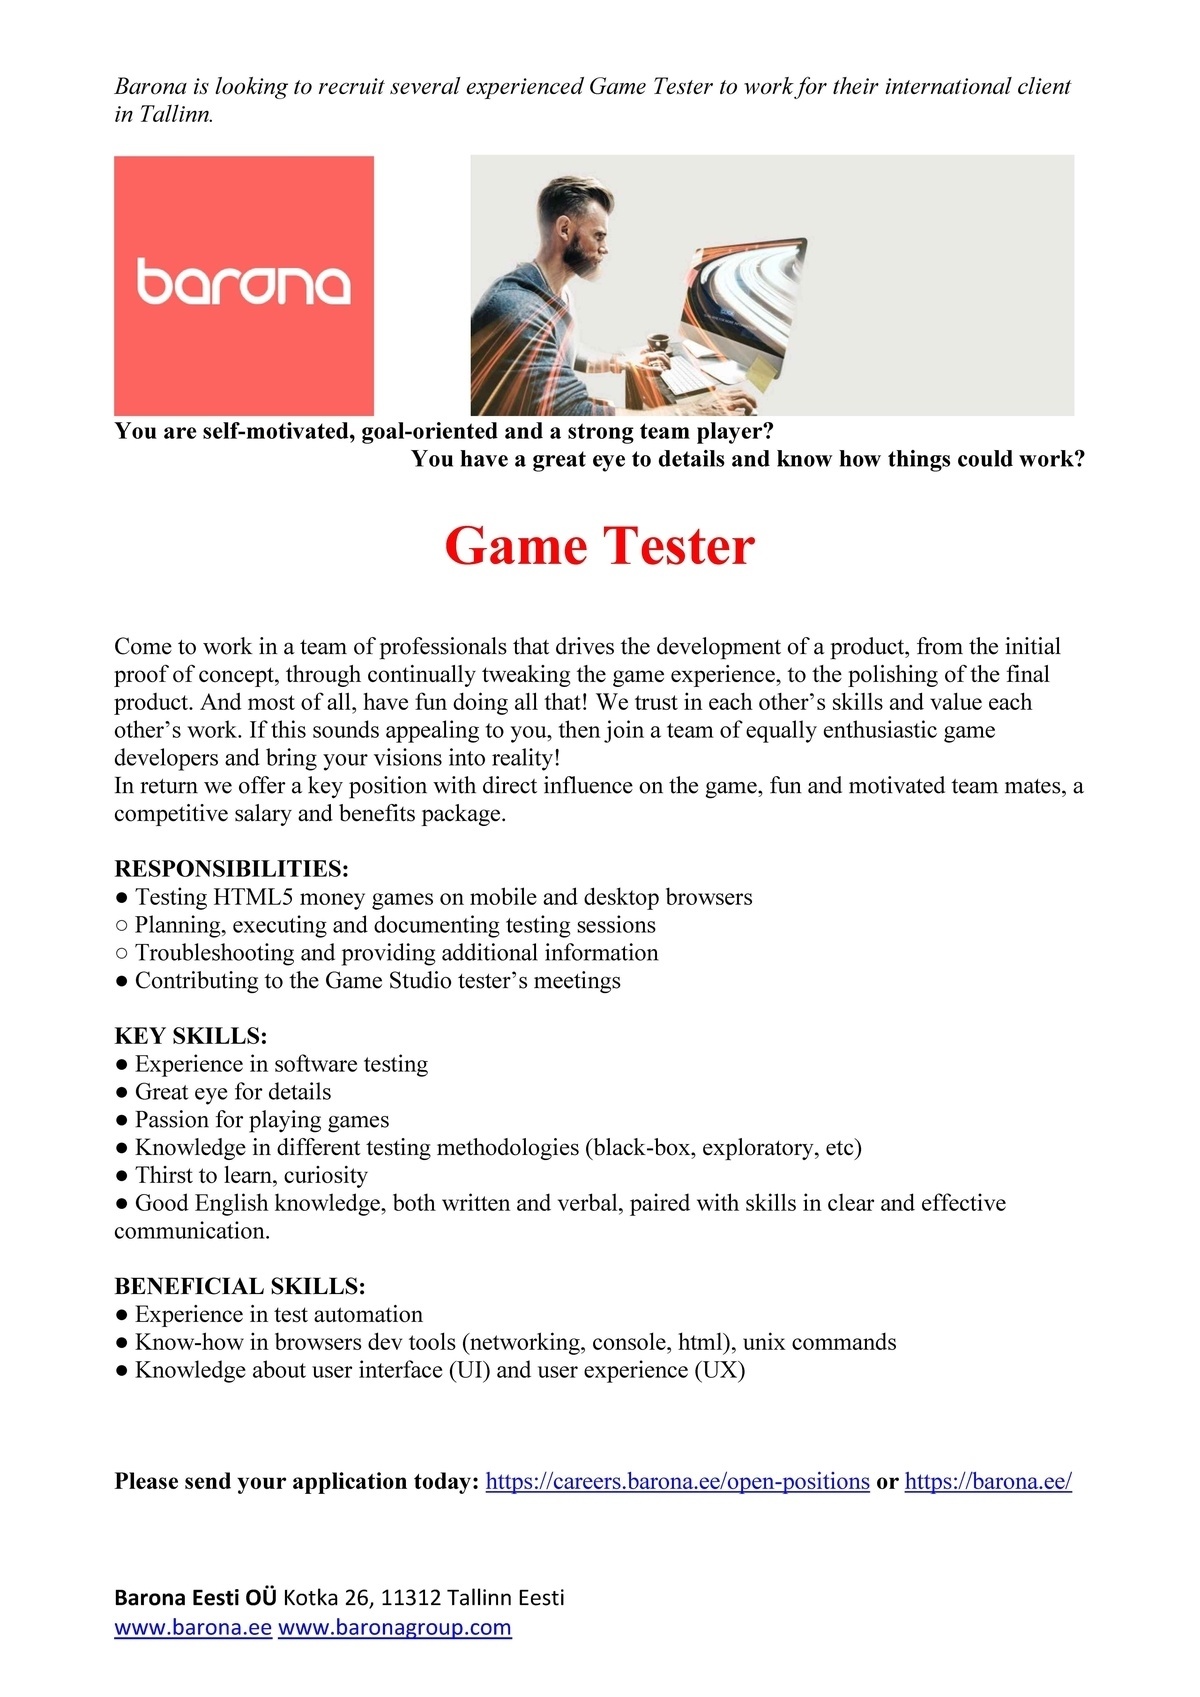 Barona Eesti OÜ Game IT Tester